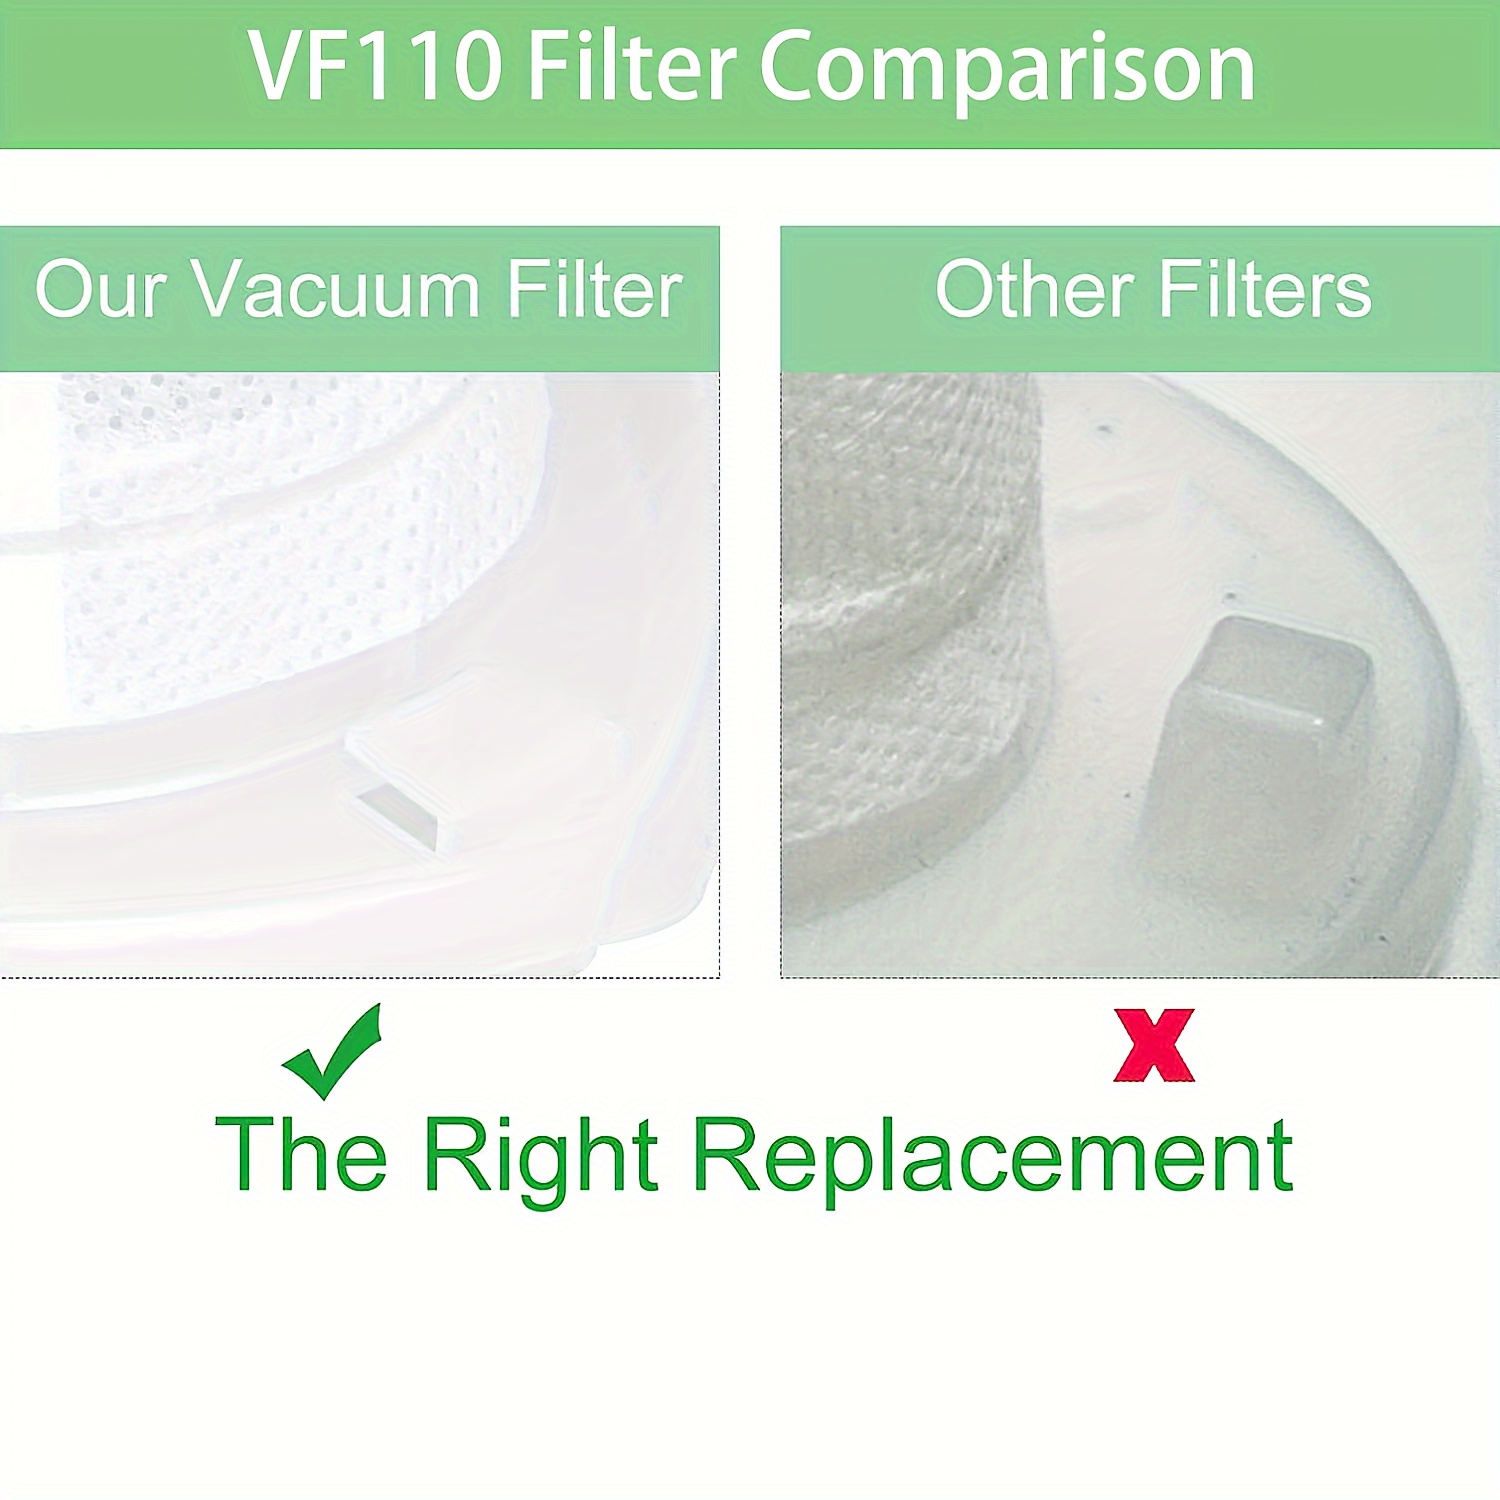 BLACK+DECKER Hand Vacuum Filter, Washable, Replacement filter for models:  CHV1410L, CHV1410, CHV9610, CHV1210, CHV1410B, CHV1510, BDH2000L (VF110)